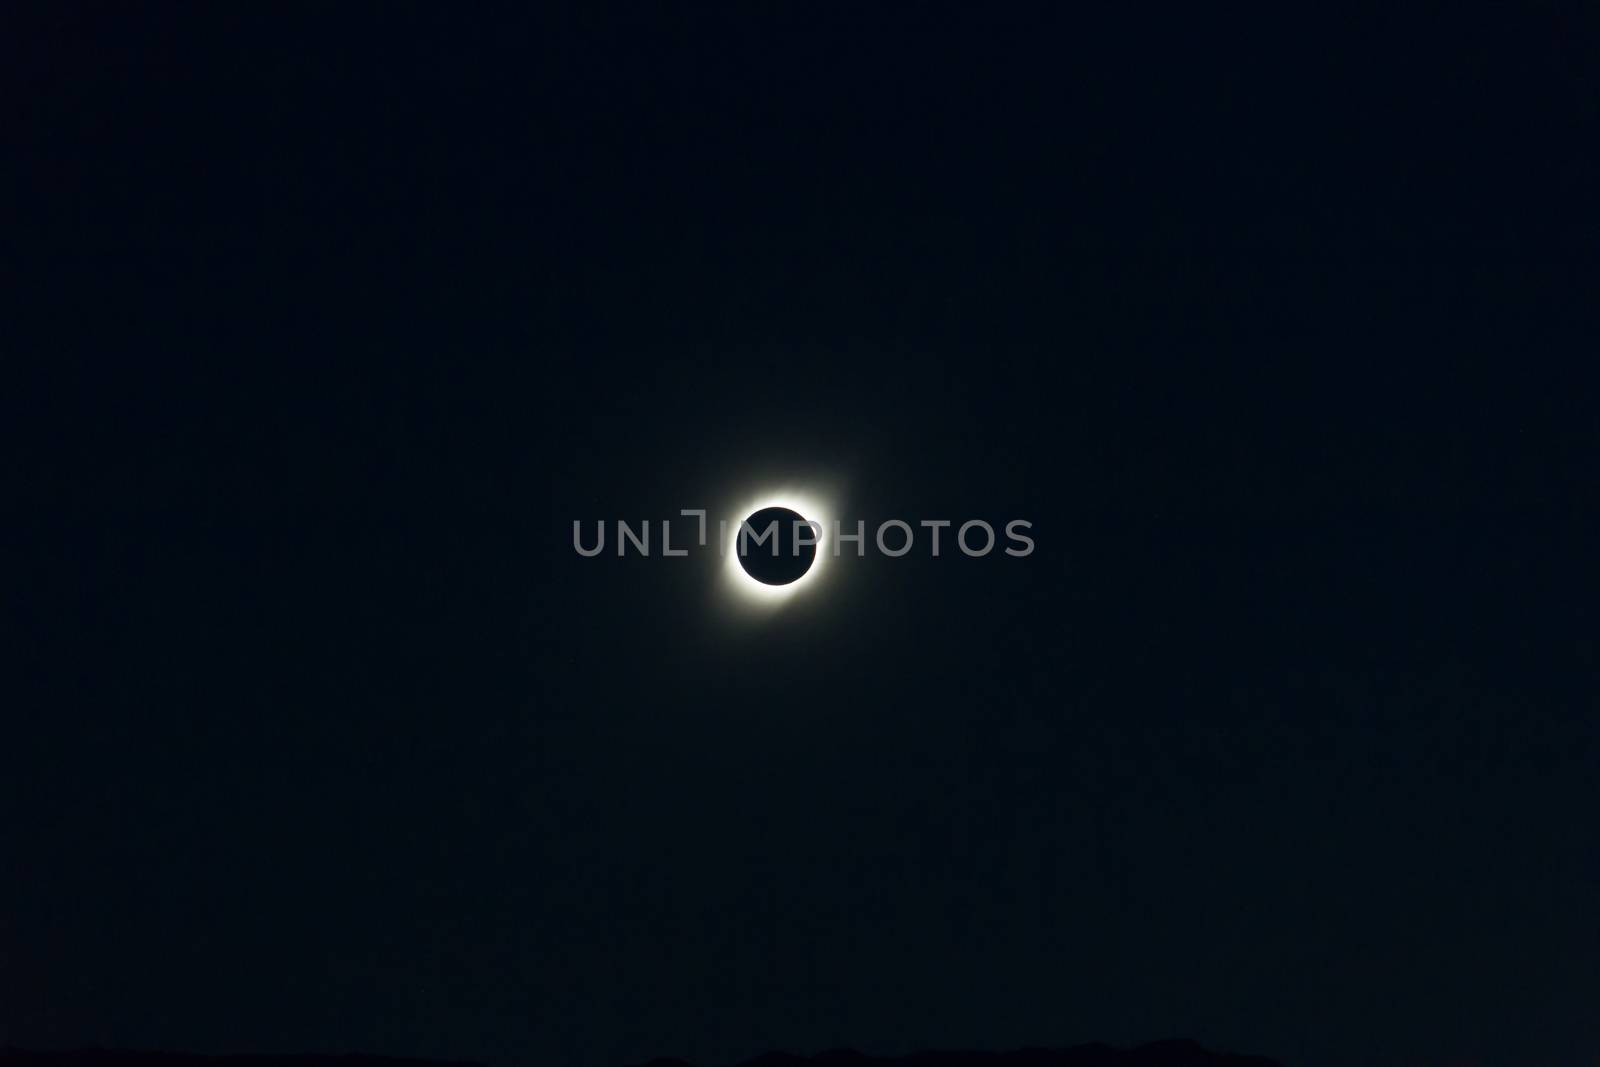 total sun eclipse seen from cordoba argentina by GabrielaBertolini